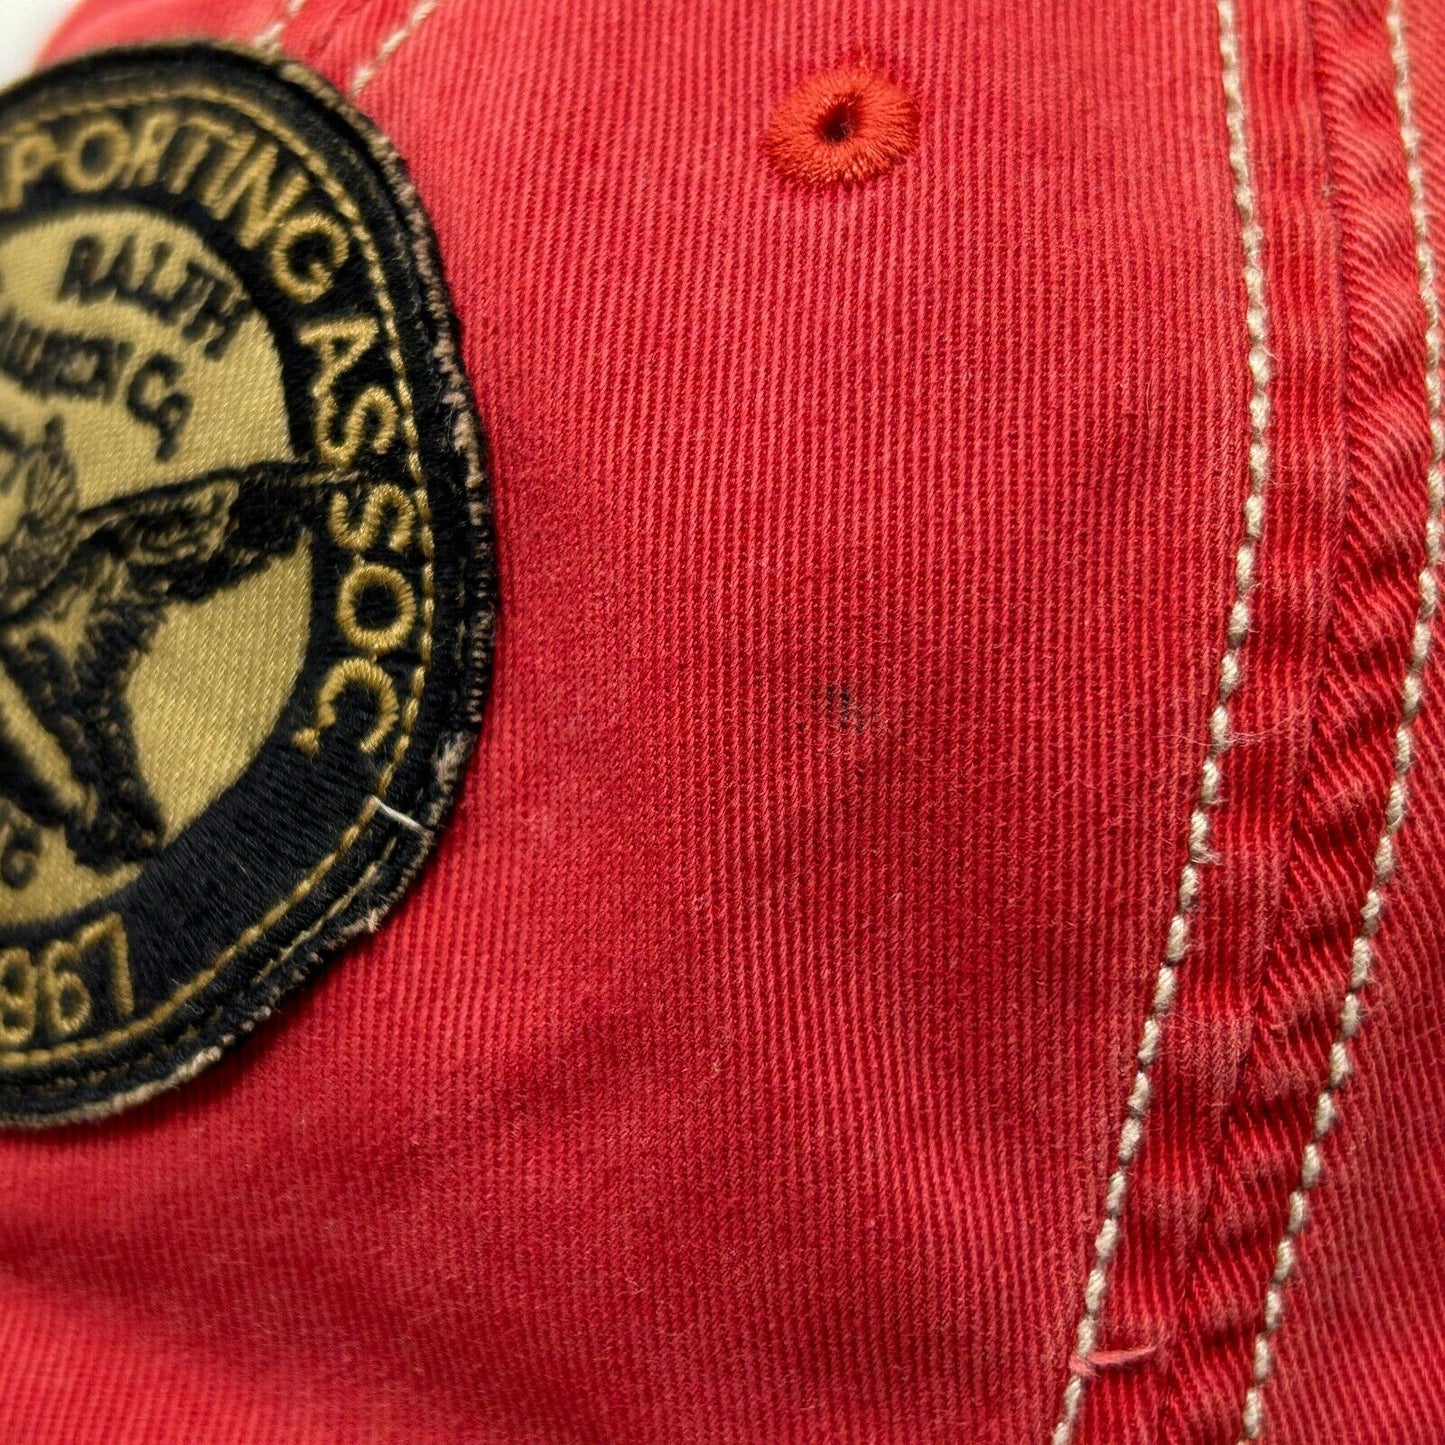 Polo Ralph Lauren Sporting Goods Assoc Hat Duck Hunting Red Dad Baseball Cap